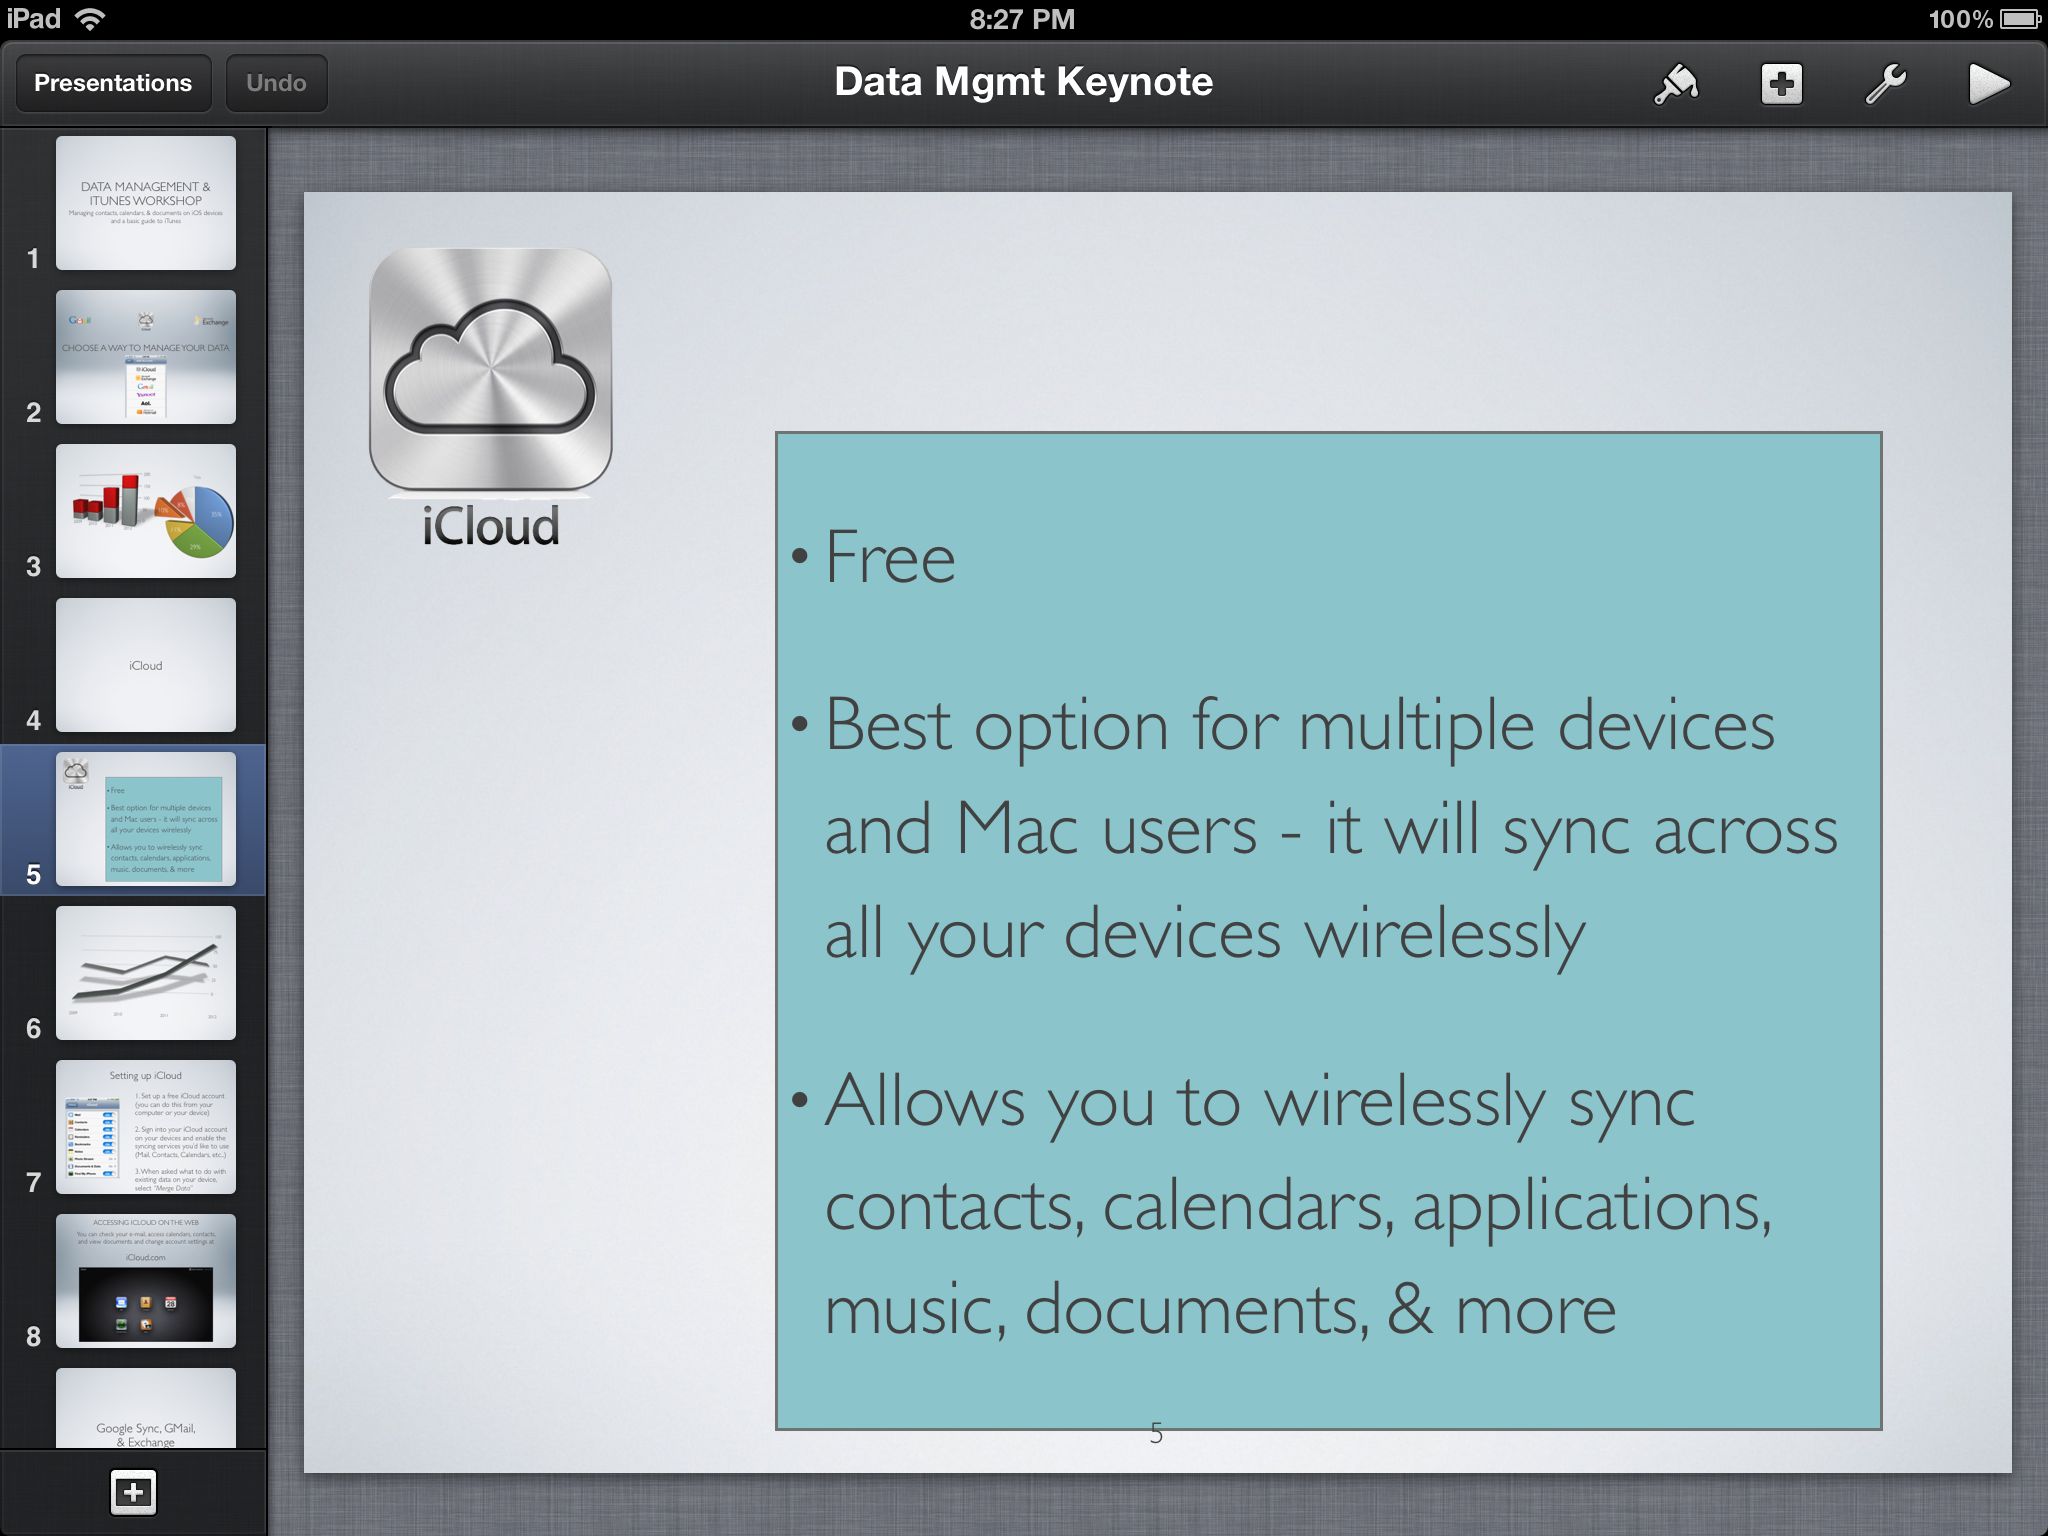 Keynote main slide view on iPad